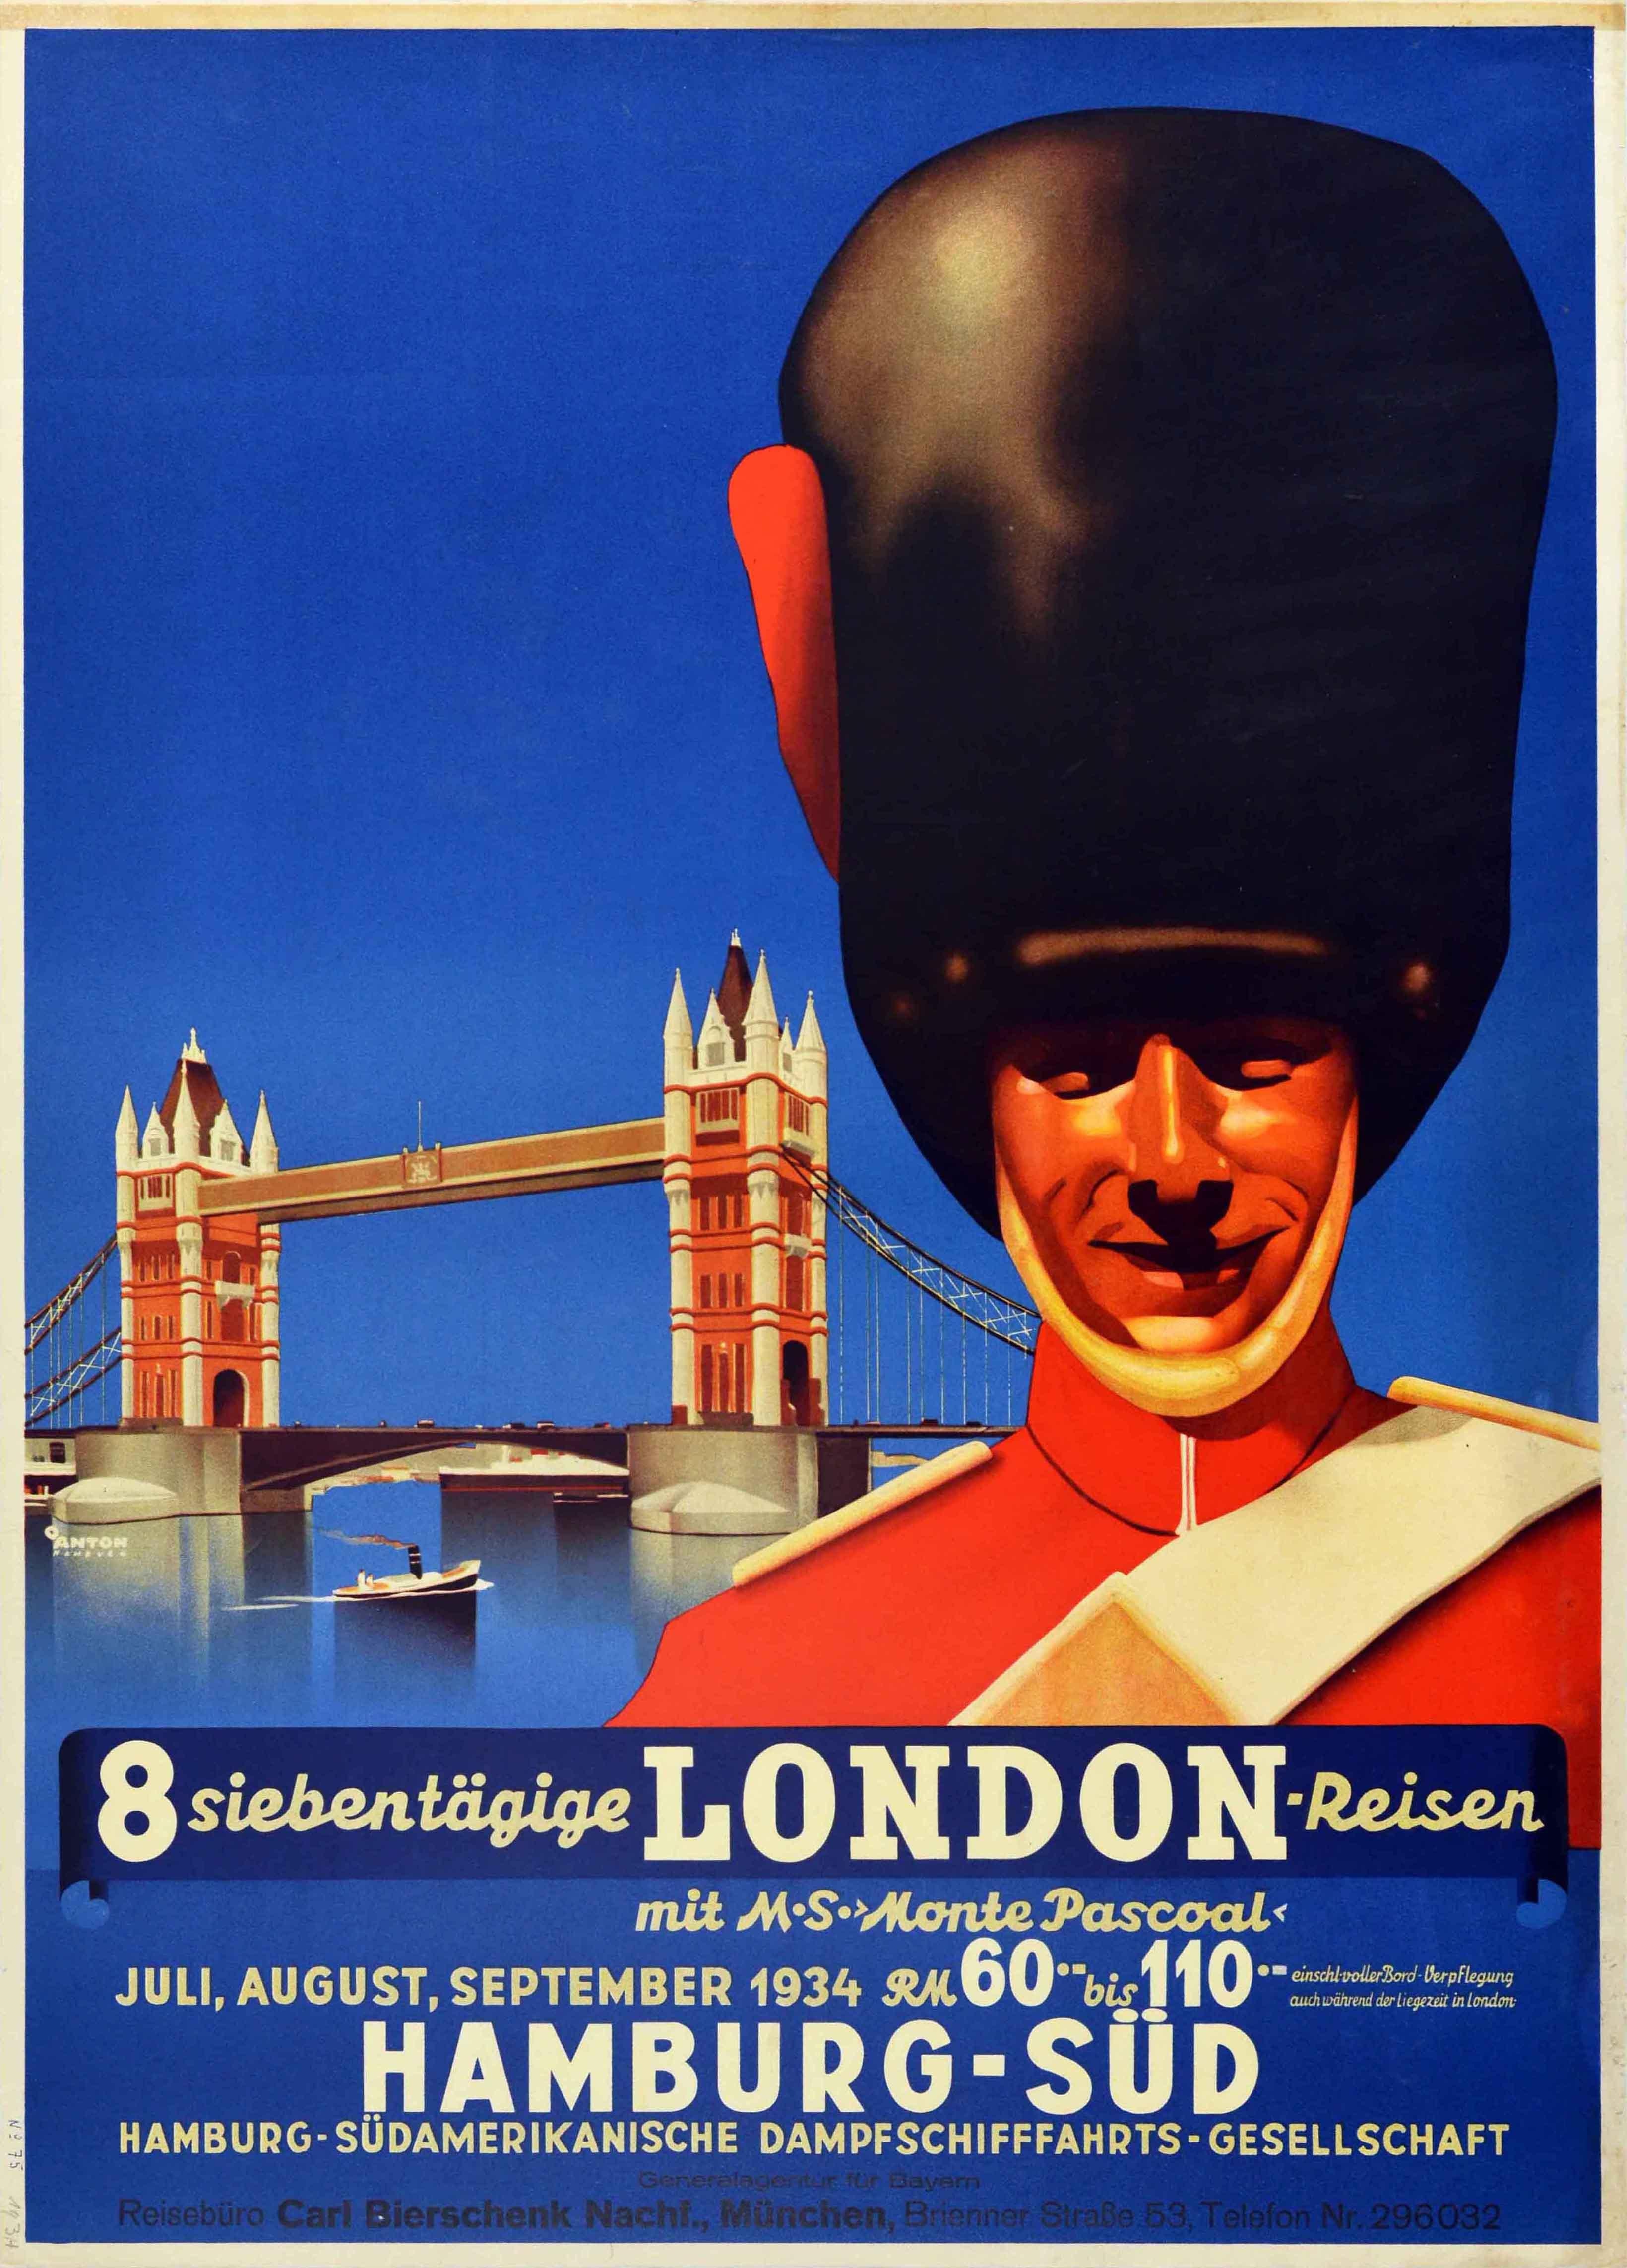 Ottomar Anton Print – Original-Vintage-Reiseplakat London Cruise Ft. Royal Guard Tower Bridge Design